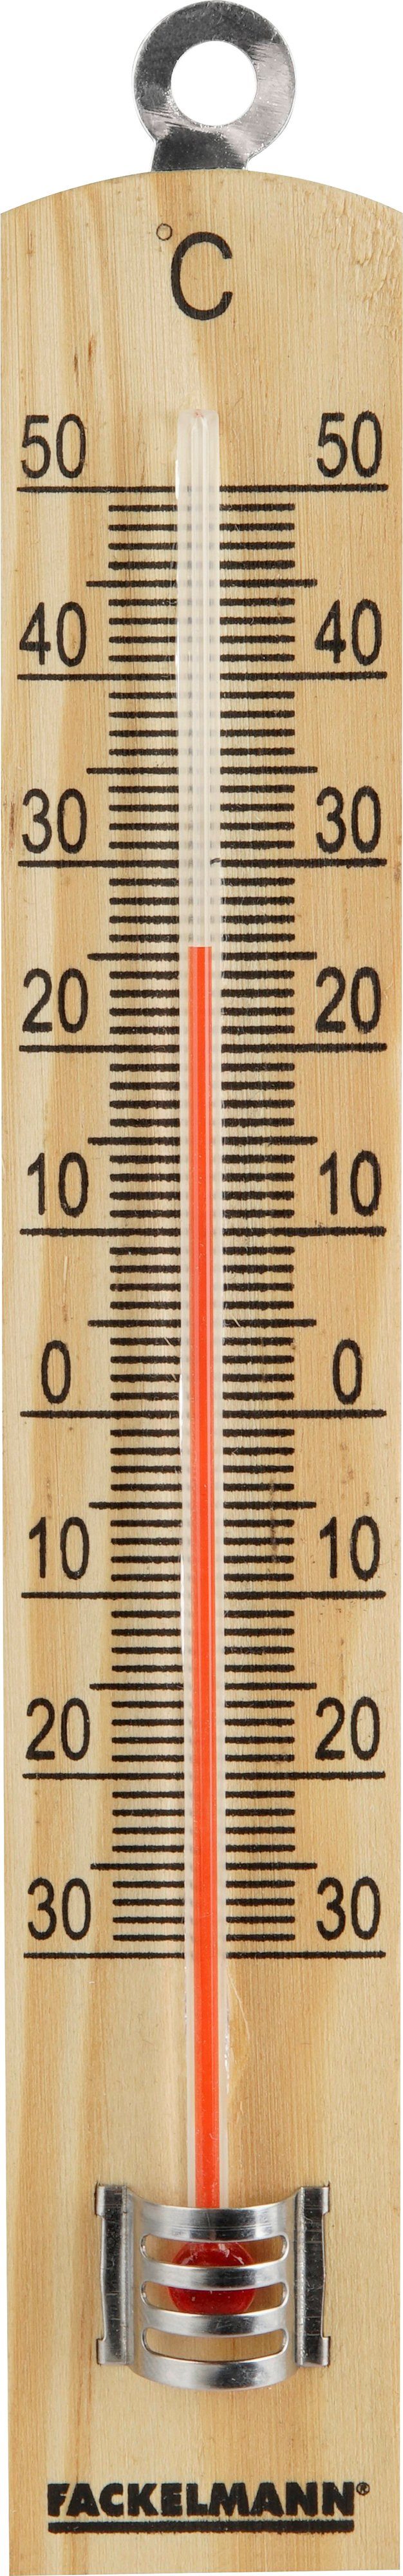 FACKELMANN Raumthermometer Fackelmann Thermometer 18 cm